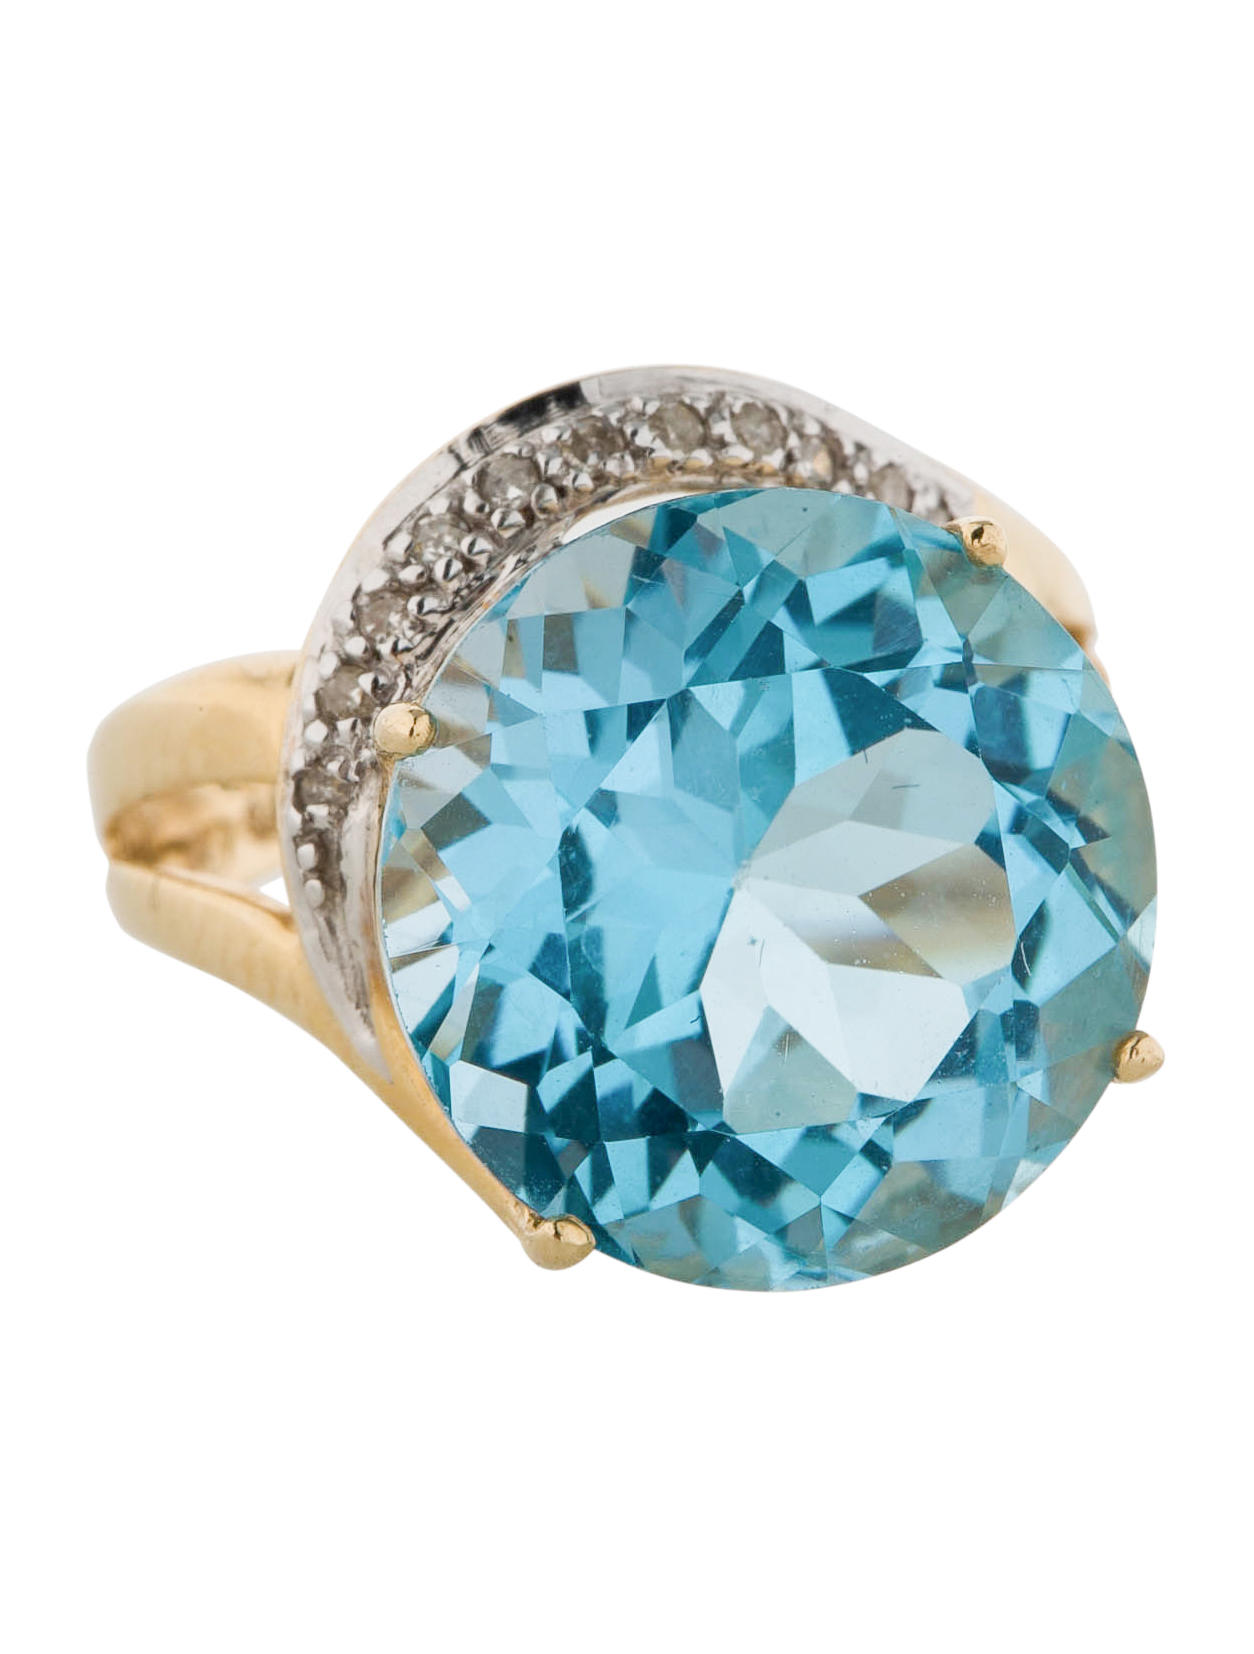 BLUE TOPAZ & DIAMOND COCKTAIL RING